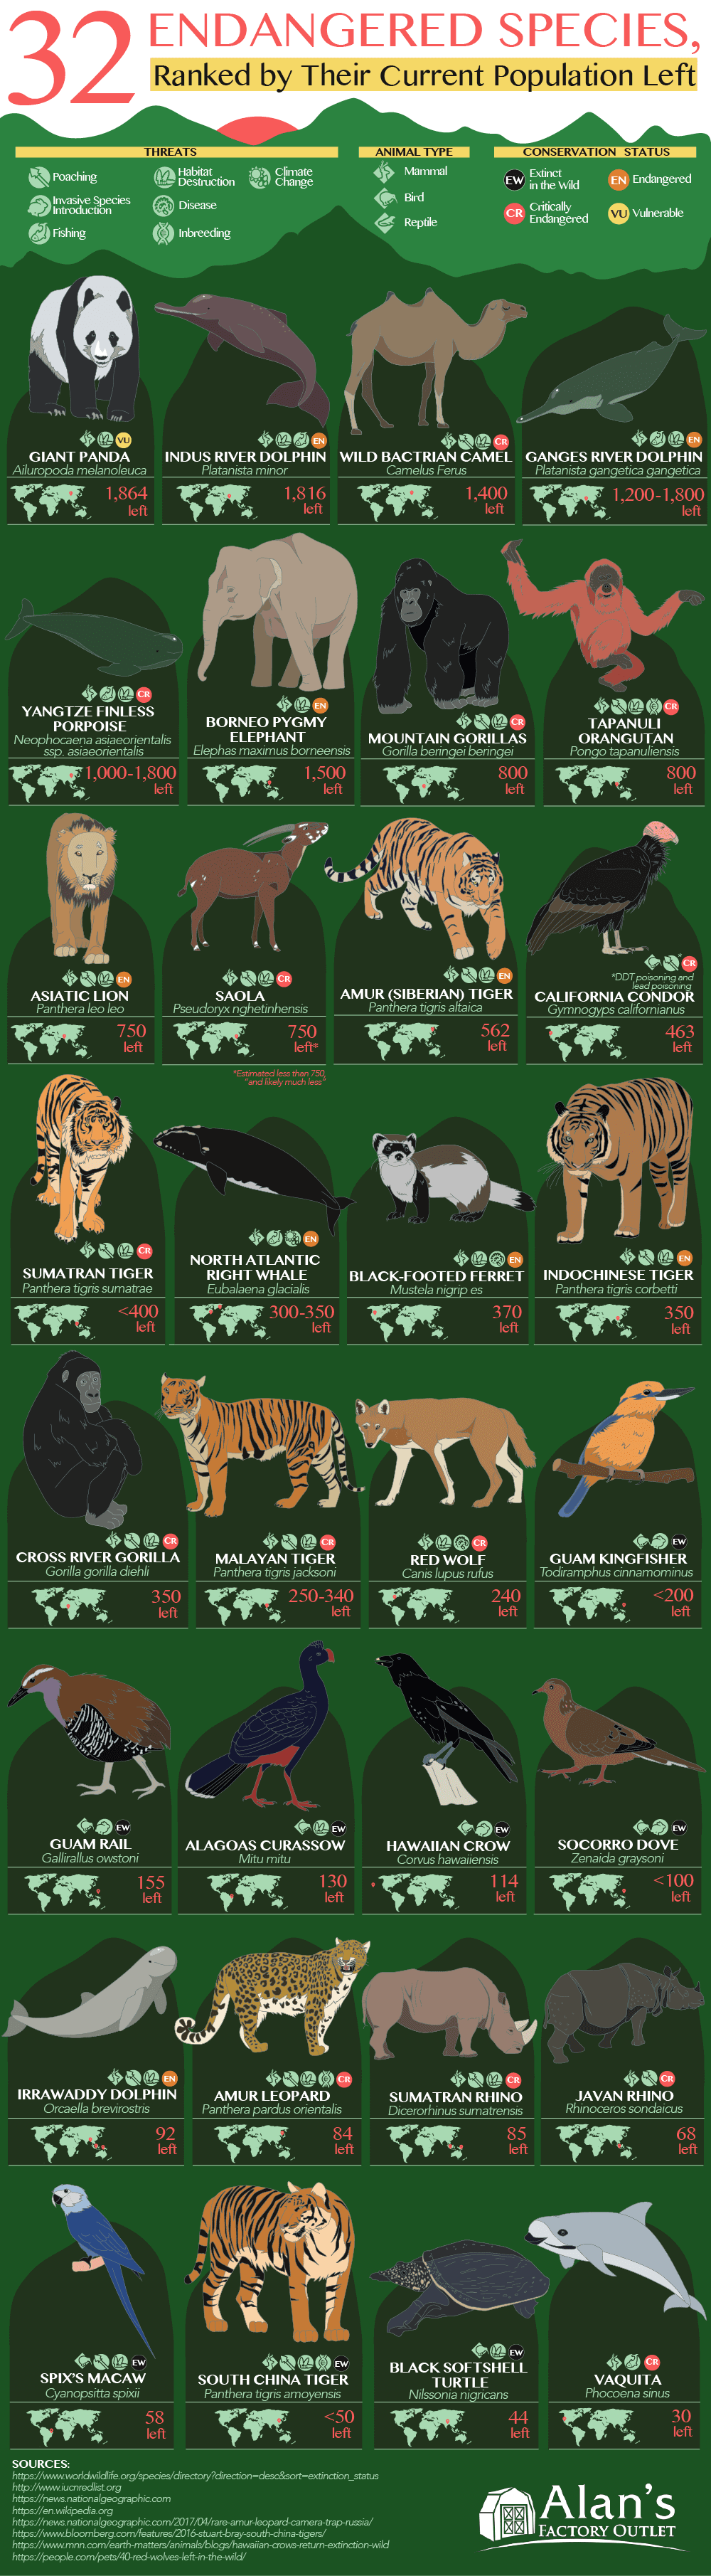 32-endangered-species-ranked-by-populaton-left